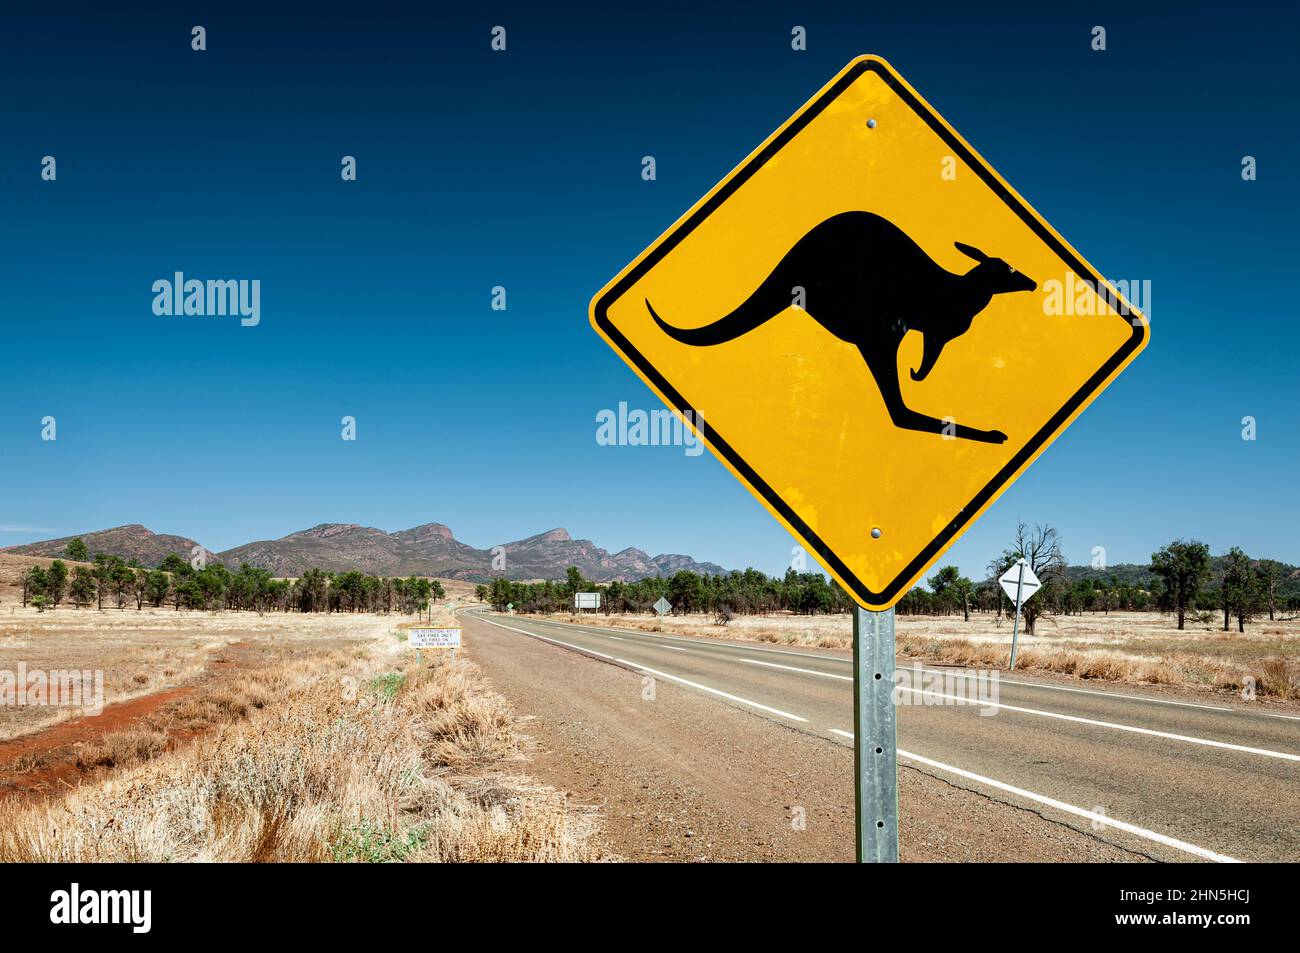 Typical australian road sign warning of crossing kangaroos. Stock Photo